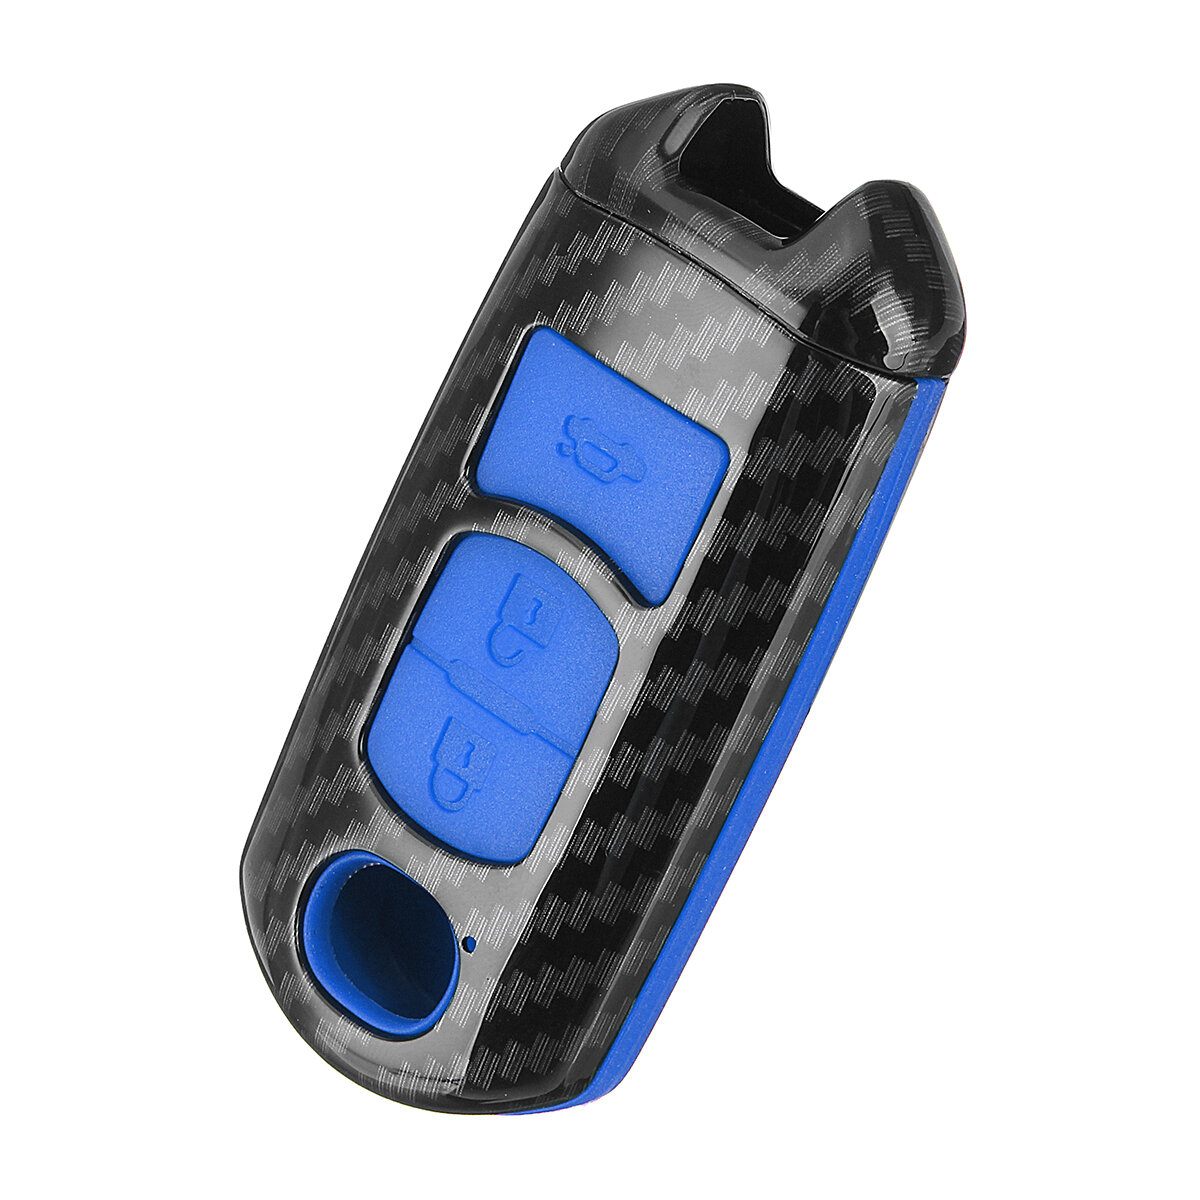 Abs carbon fiber remote smart car key case/bag cover fob shell for ...